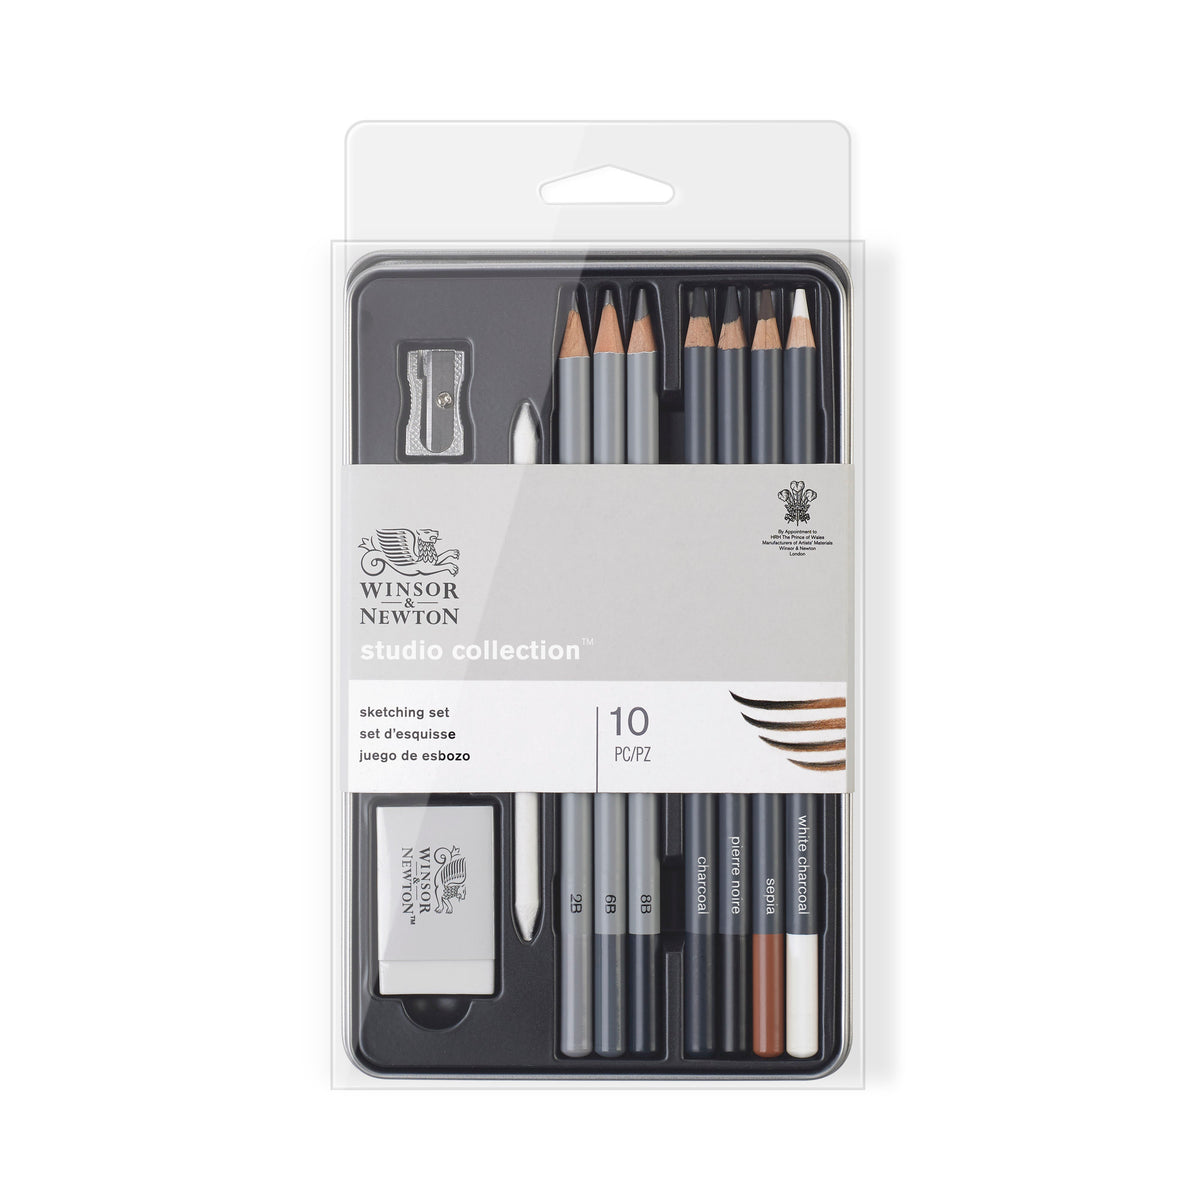 Winsor &amp; Newton Studio Collection Sketching Pencil Set of 10 pieces